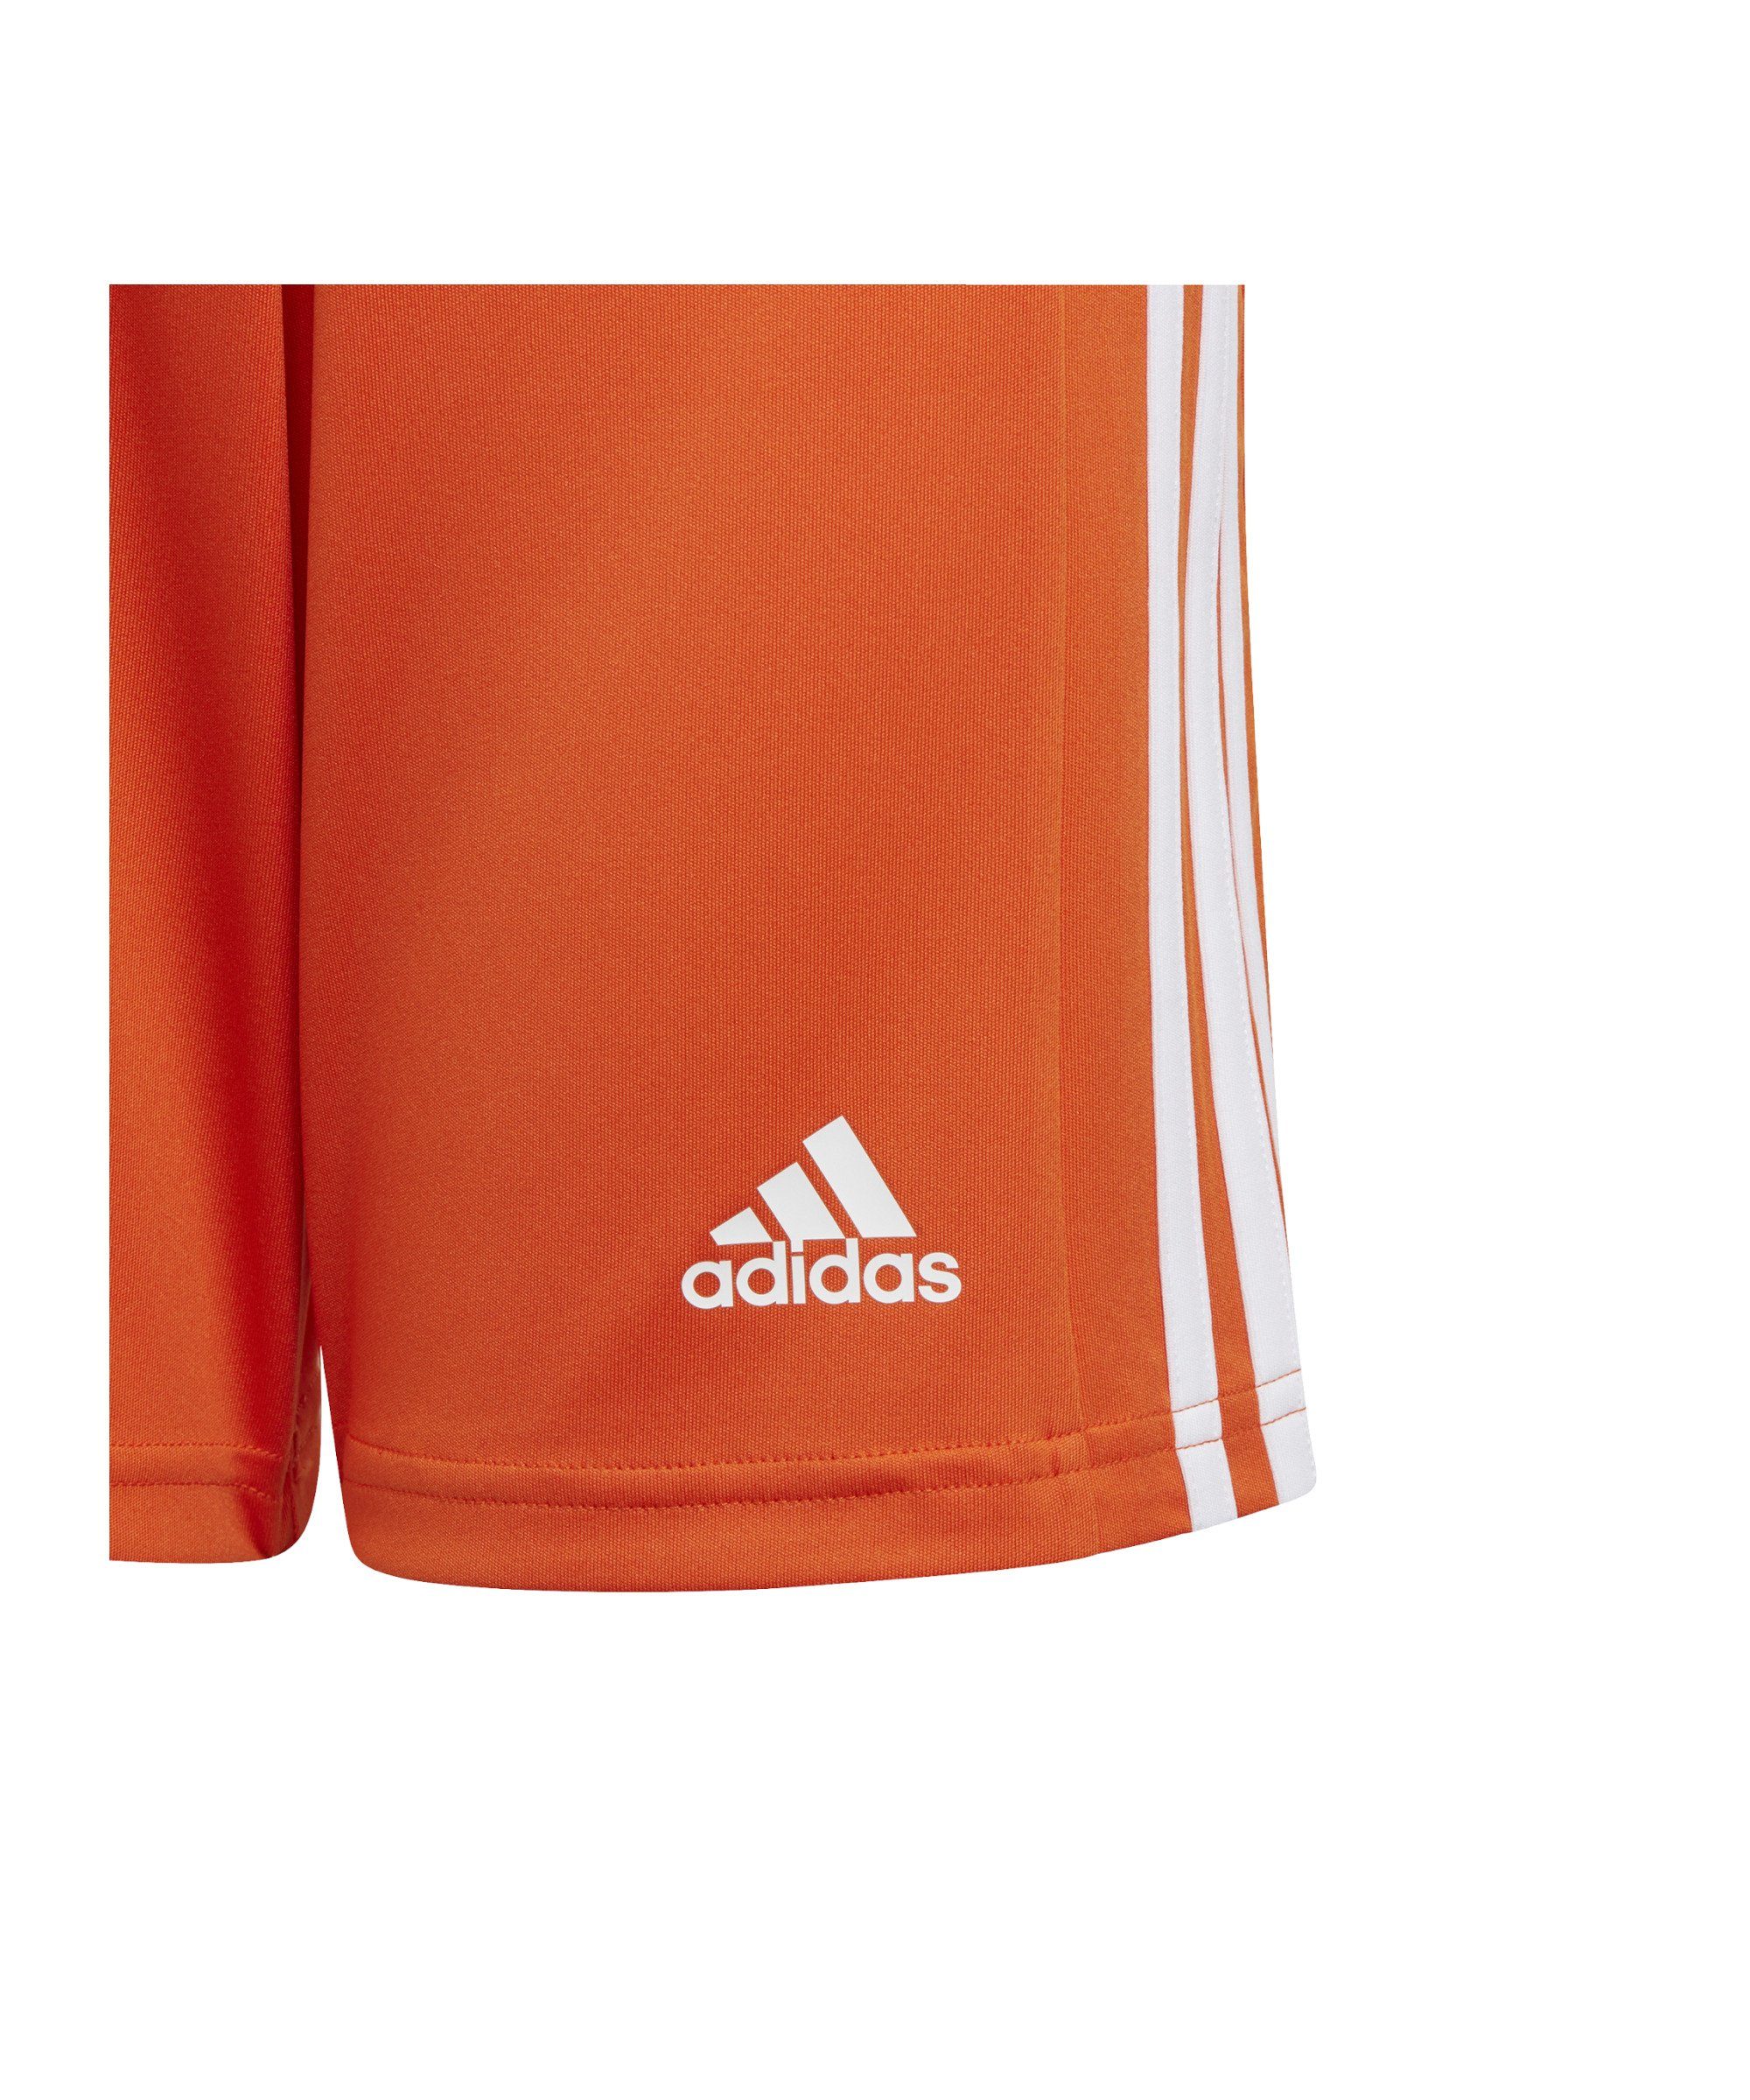 adidas Performance Sporthose Kids 21 Short orangeweiss Squadra